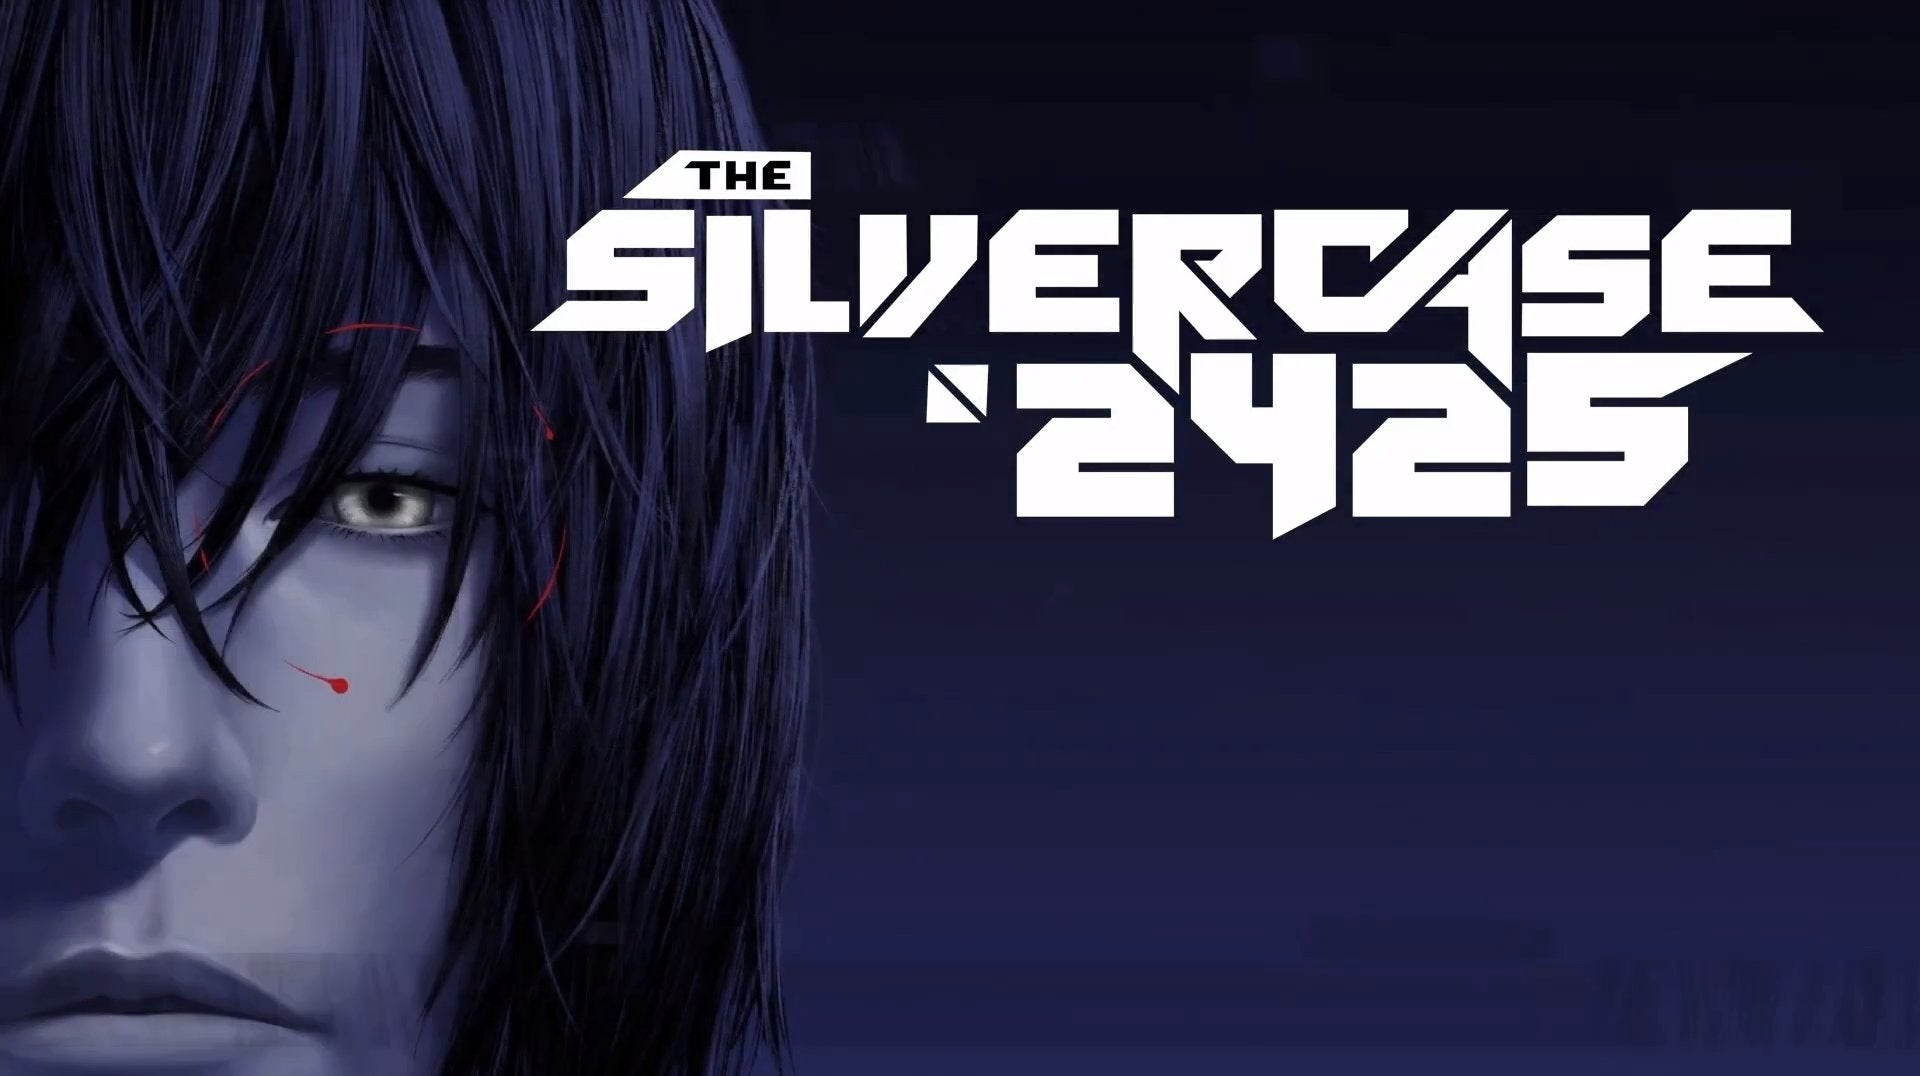 Imagen para The Silver Case 2425 para Switch reunirá las dos visual novels de Suda51